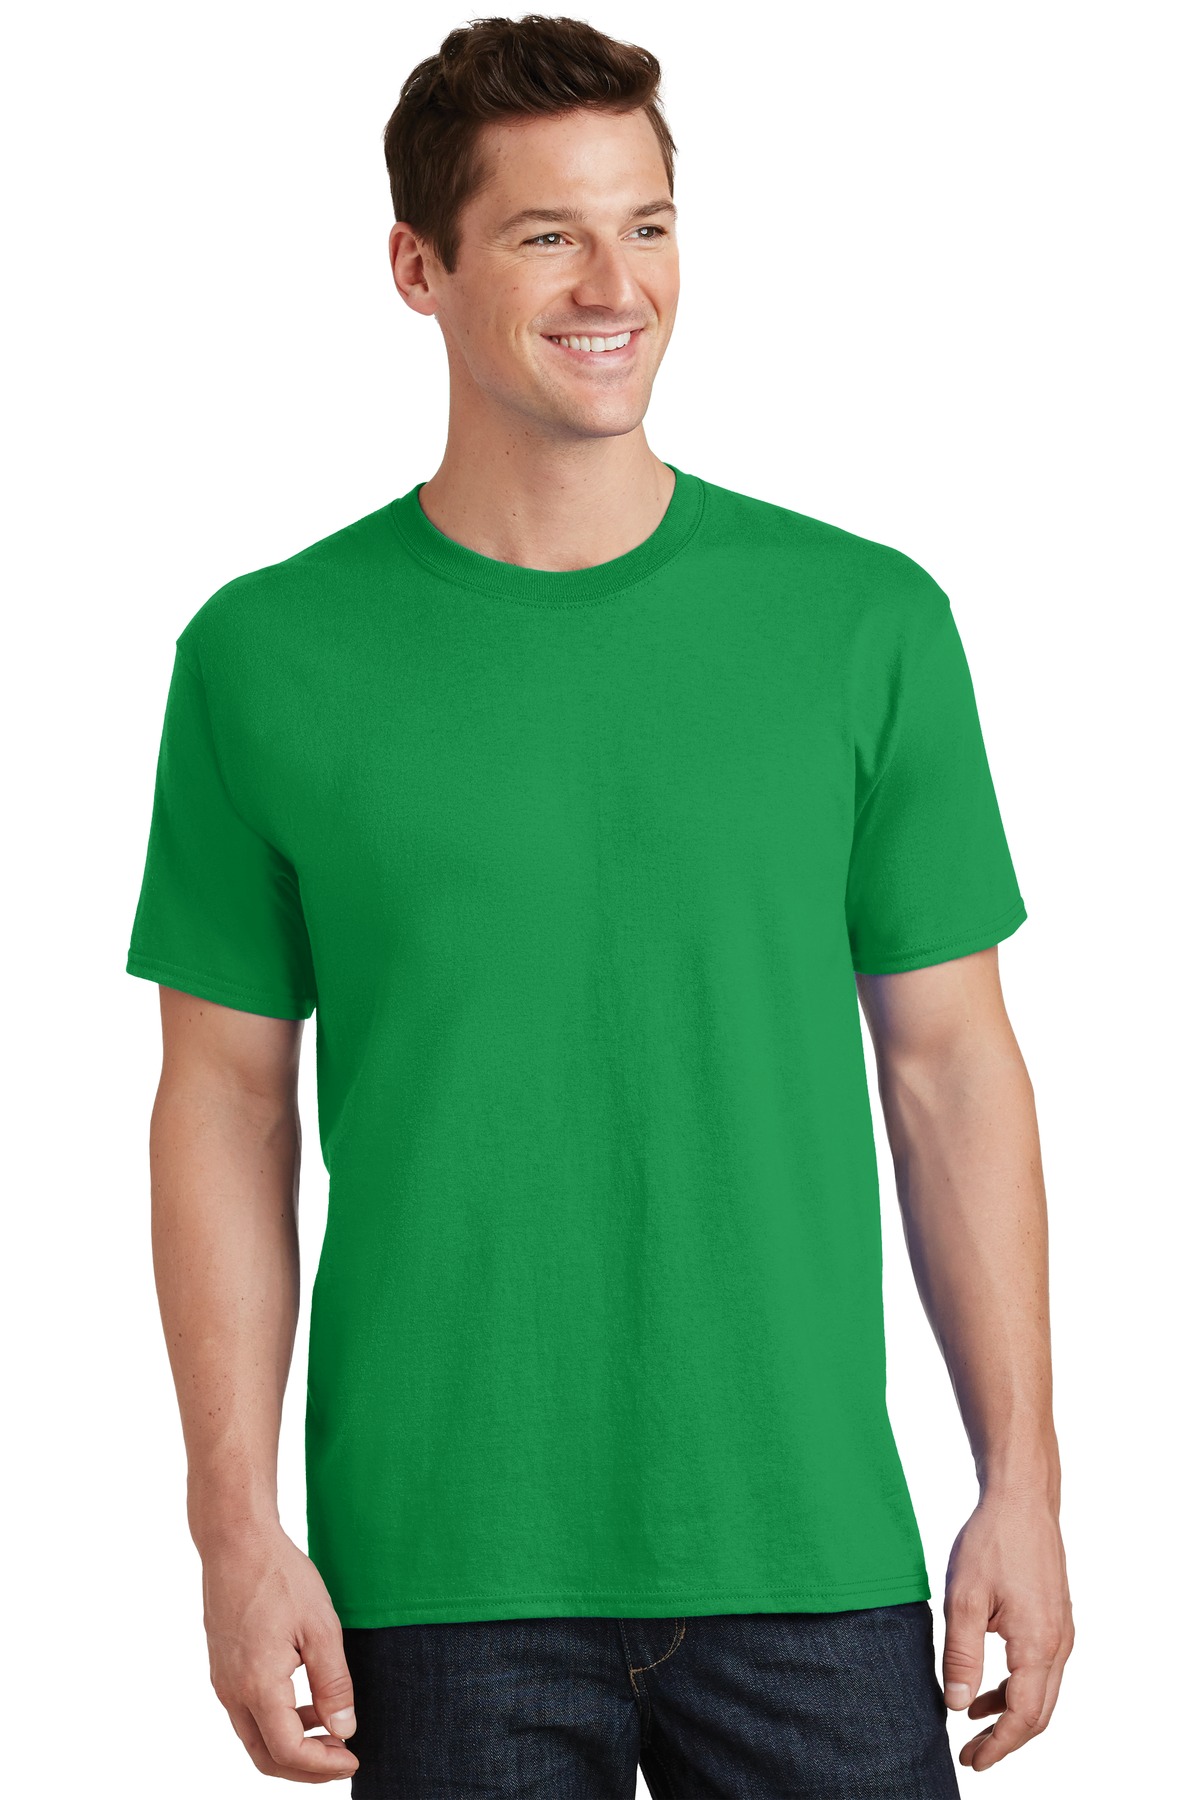 Port & Co Adult Male Men Plain Short Sleeves T-Shirt Clover Green Large - image 1 of 2